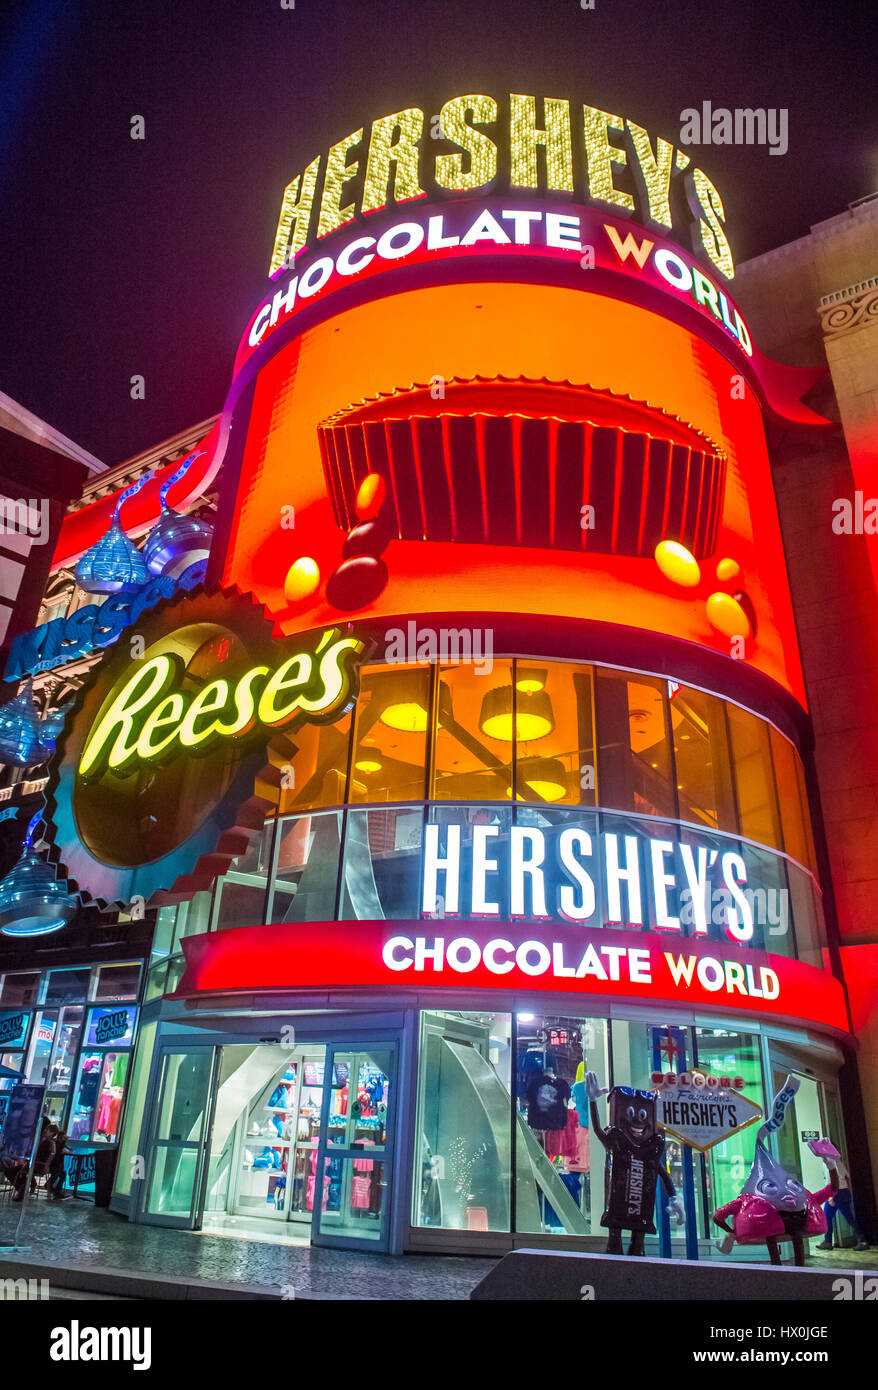 HERSHEY'S CHOCOLATE WORLD Attraction Las Vegas